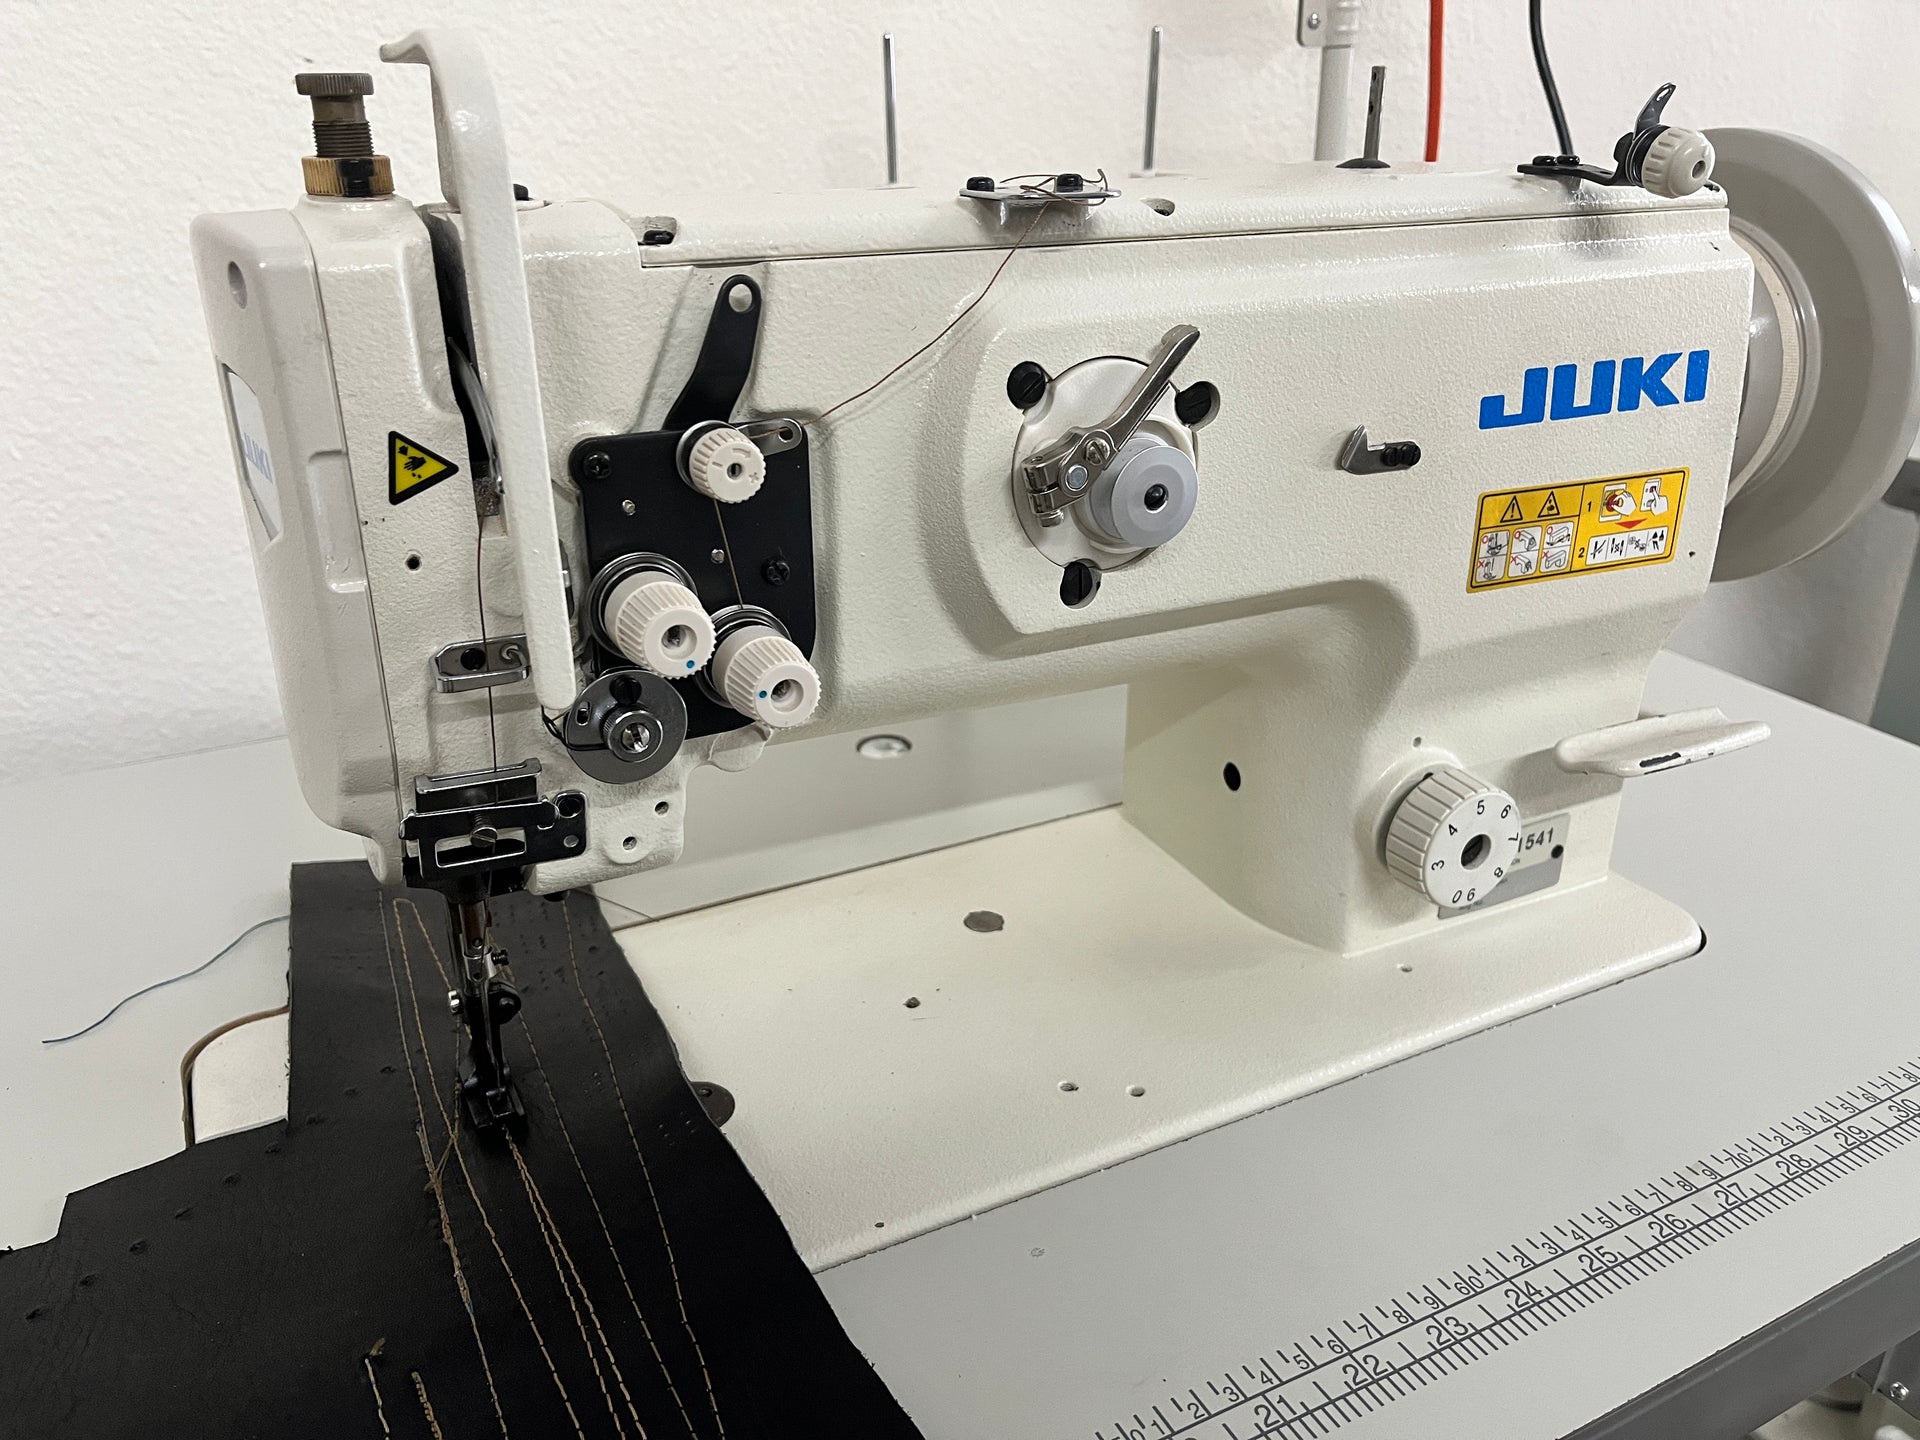 Juki Dnu-1541 Industrial Walking Foot Sewing Machine, Servo Motor